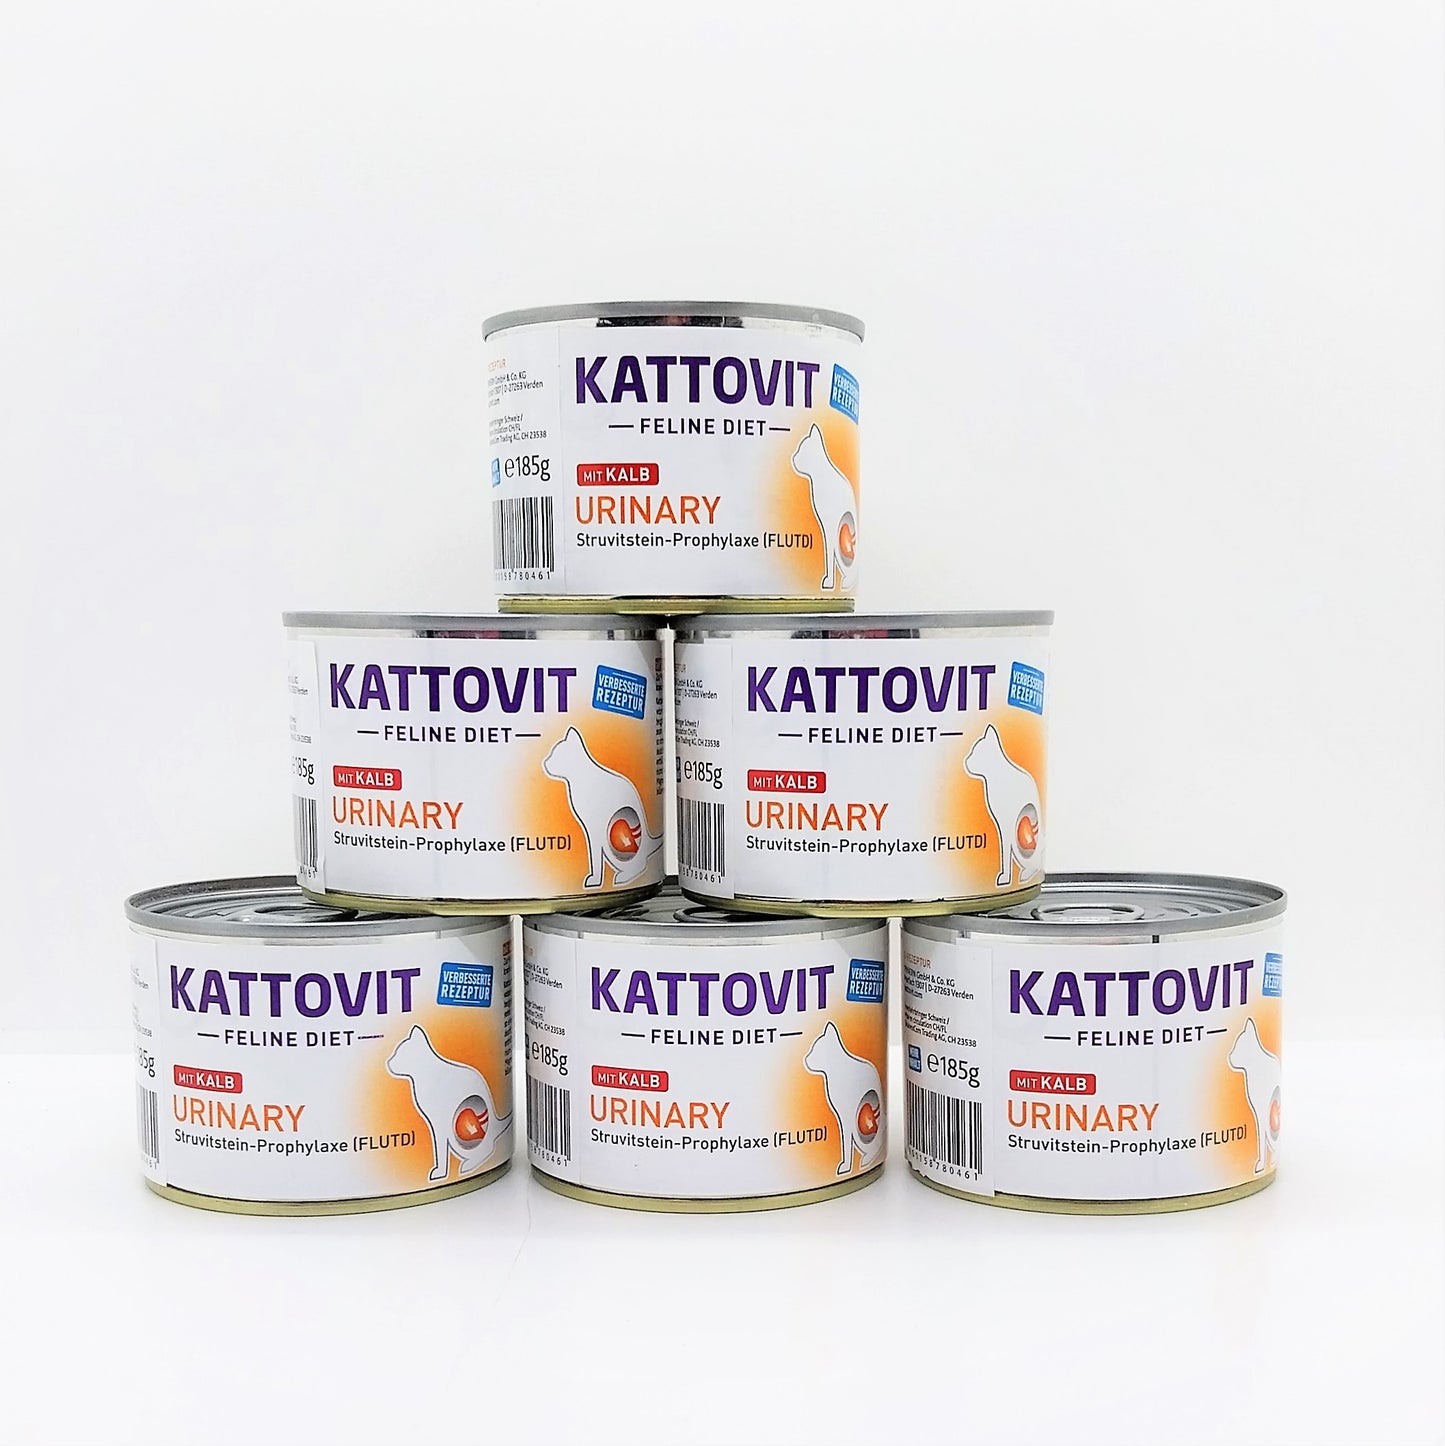 Kattovit Feline Diet - Struvitstein-Prophylaxe (FLUTD) Urinary Huhn, Urinary Kalb, Dose 185 g